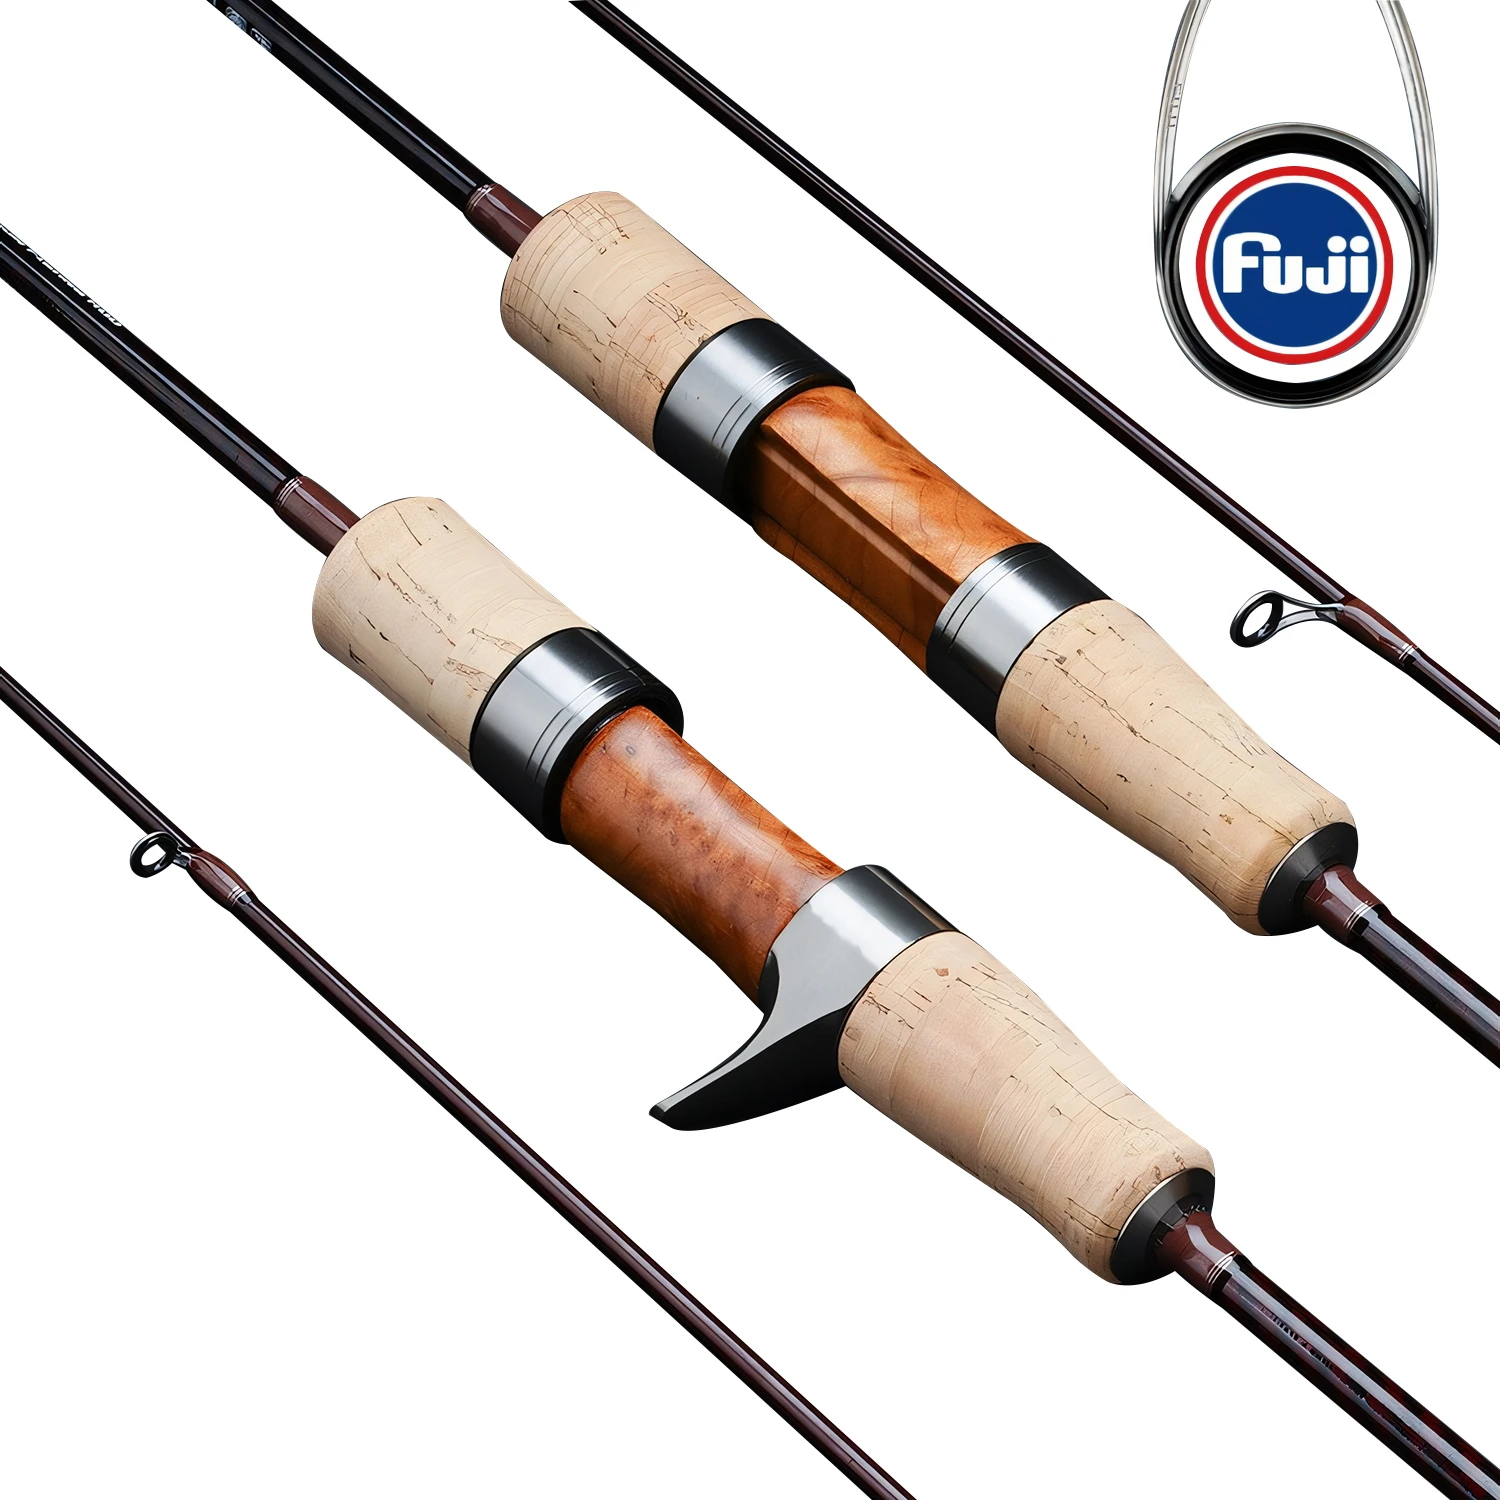 

Fuji Guide Ring,Carbon Fiber Ultralight UL Lure Rod,Carp,Trout,Bass,Small Fish Rod,Spinning / Casting Rod,1.8m Fishing Pole Tool